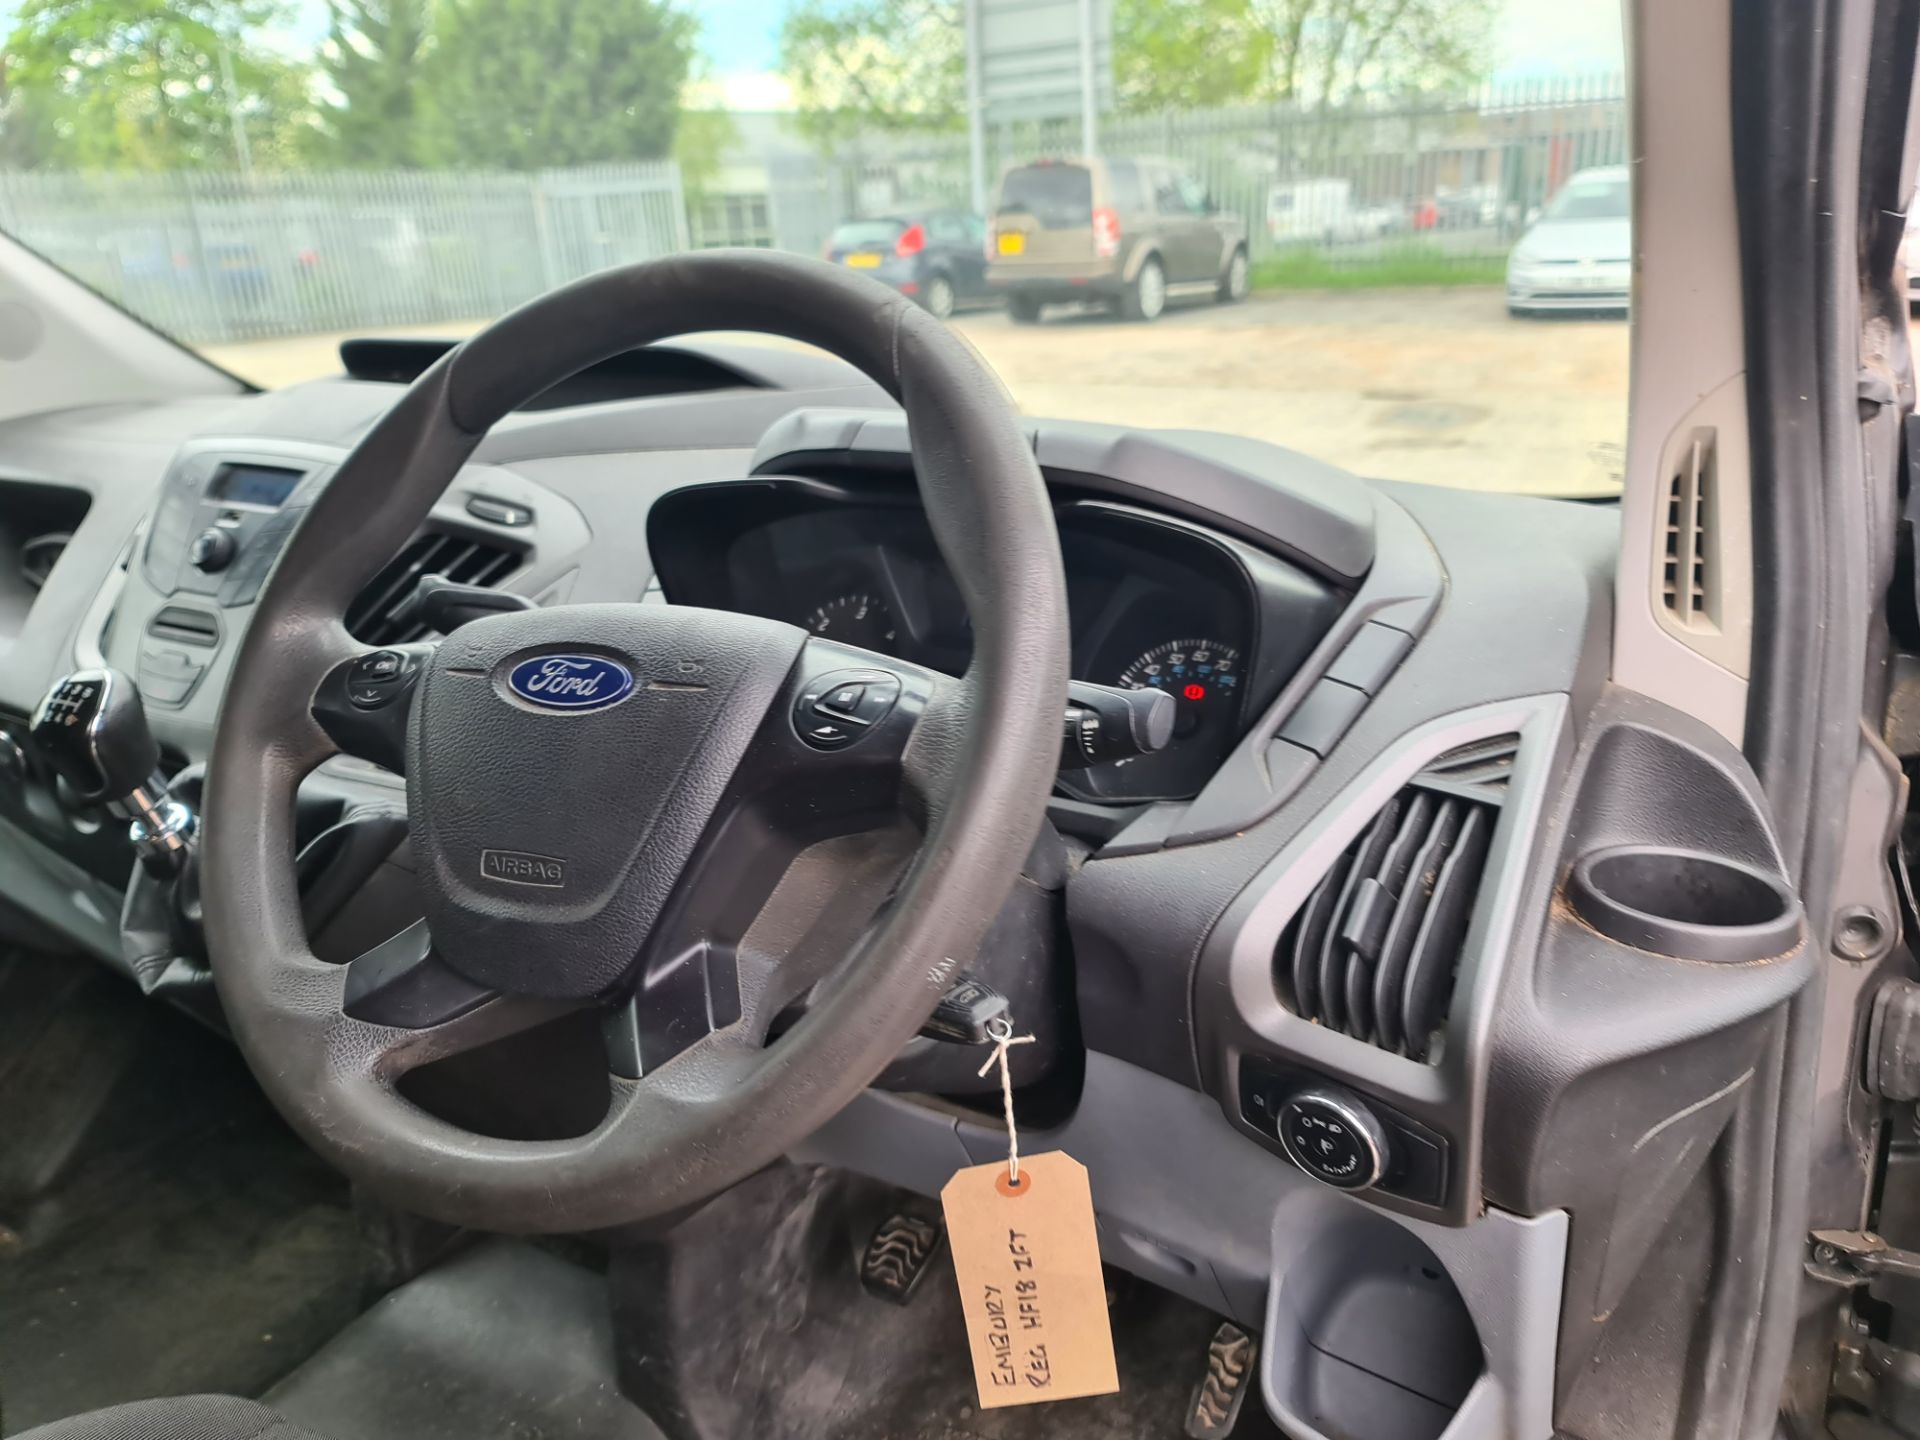 2018 Ford Transit Custom 270 panel van - Image 28 of 71